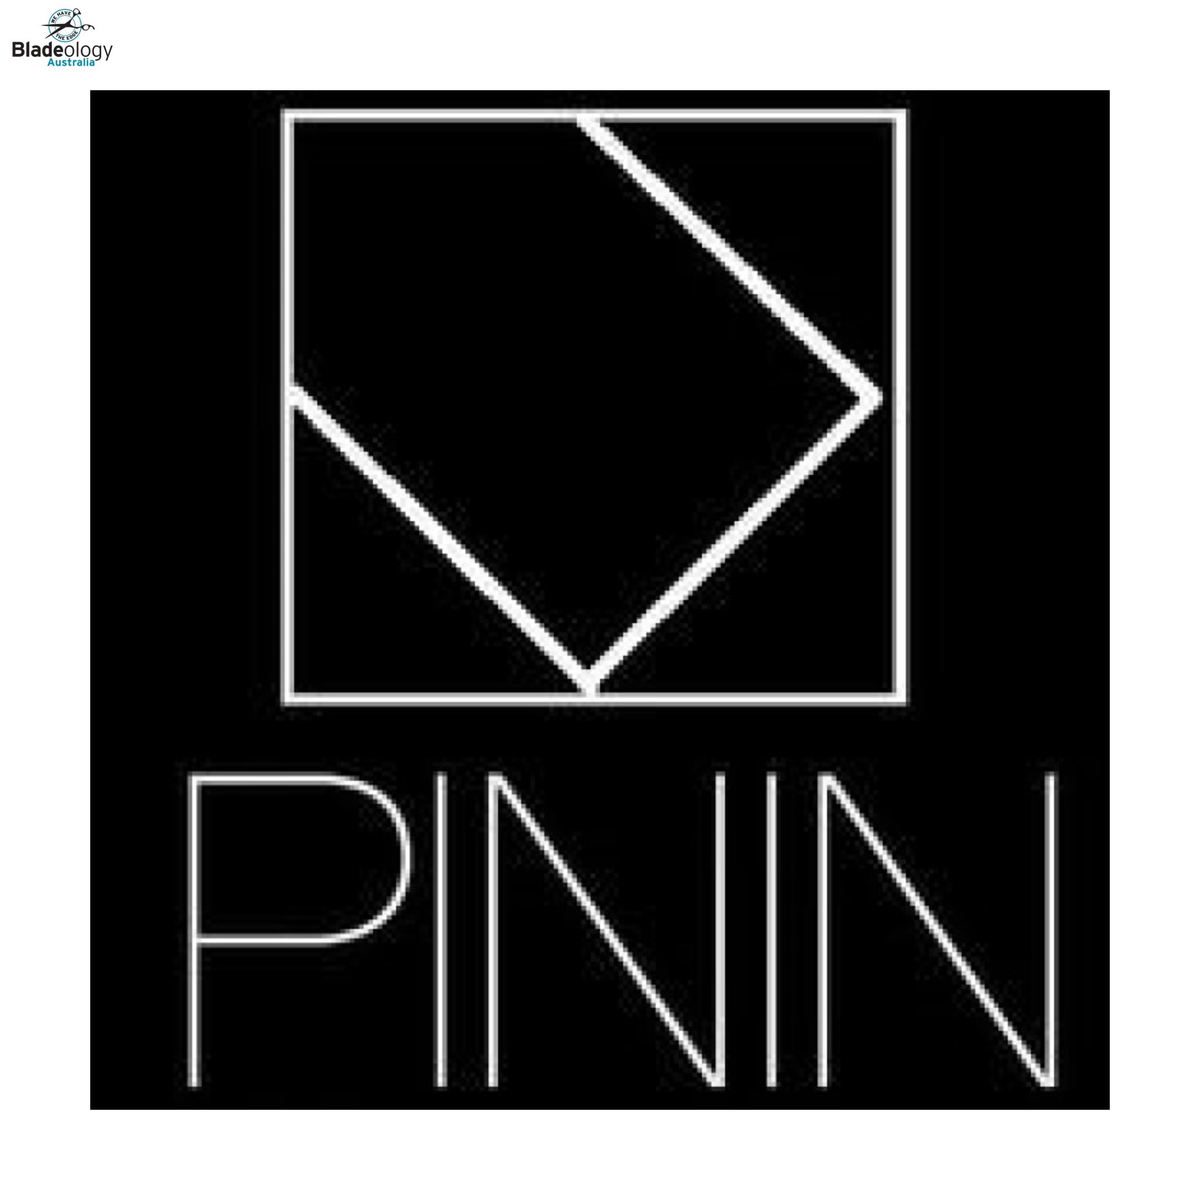 Pinin Italian Scissors Logo